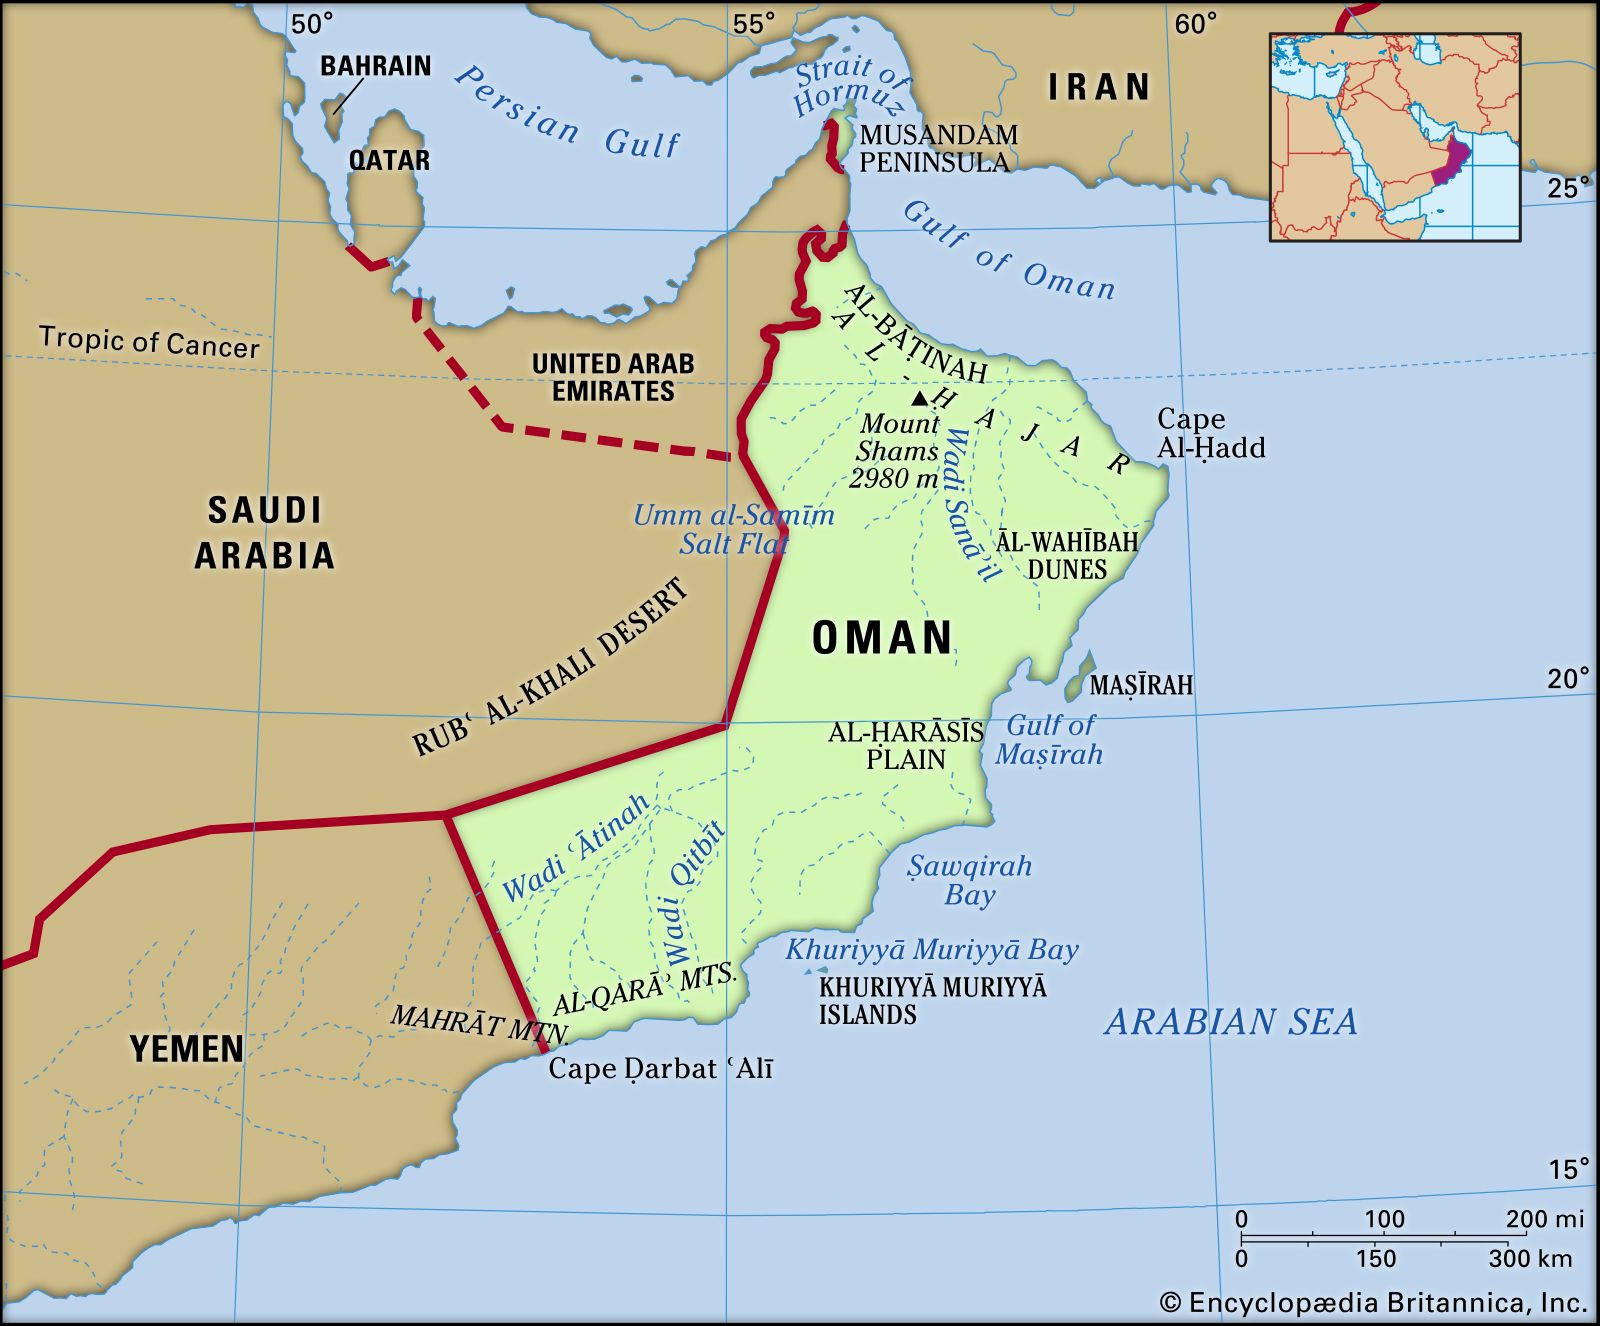 Description: Oman | History, Map, Flag, Capital, Population, & Facts | Britannica